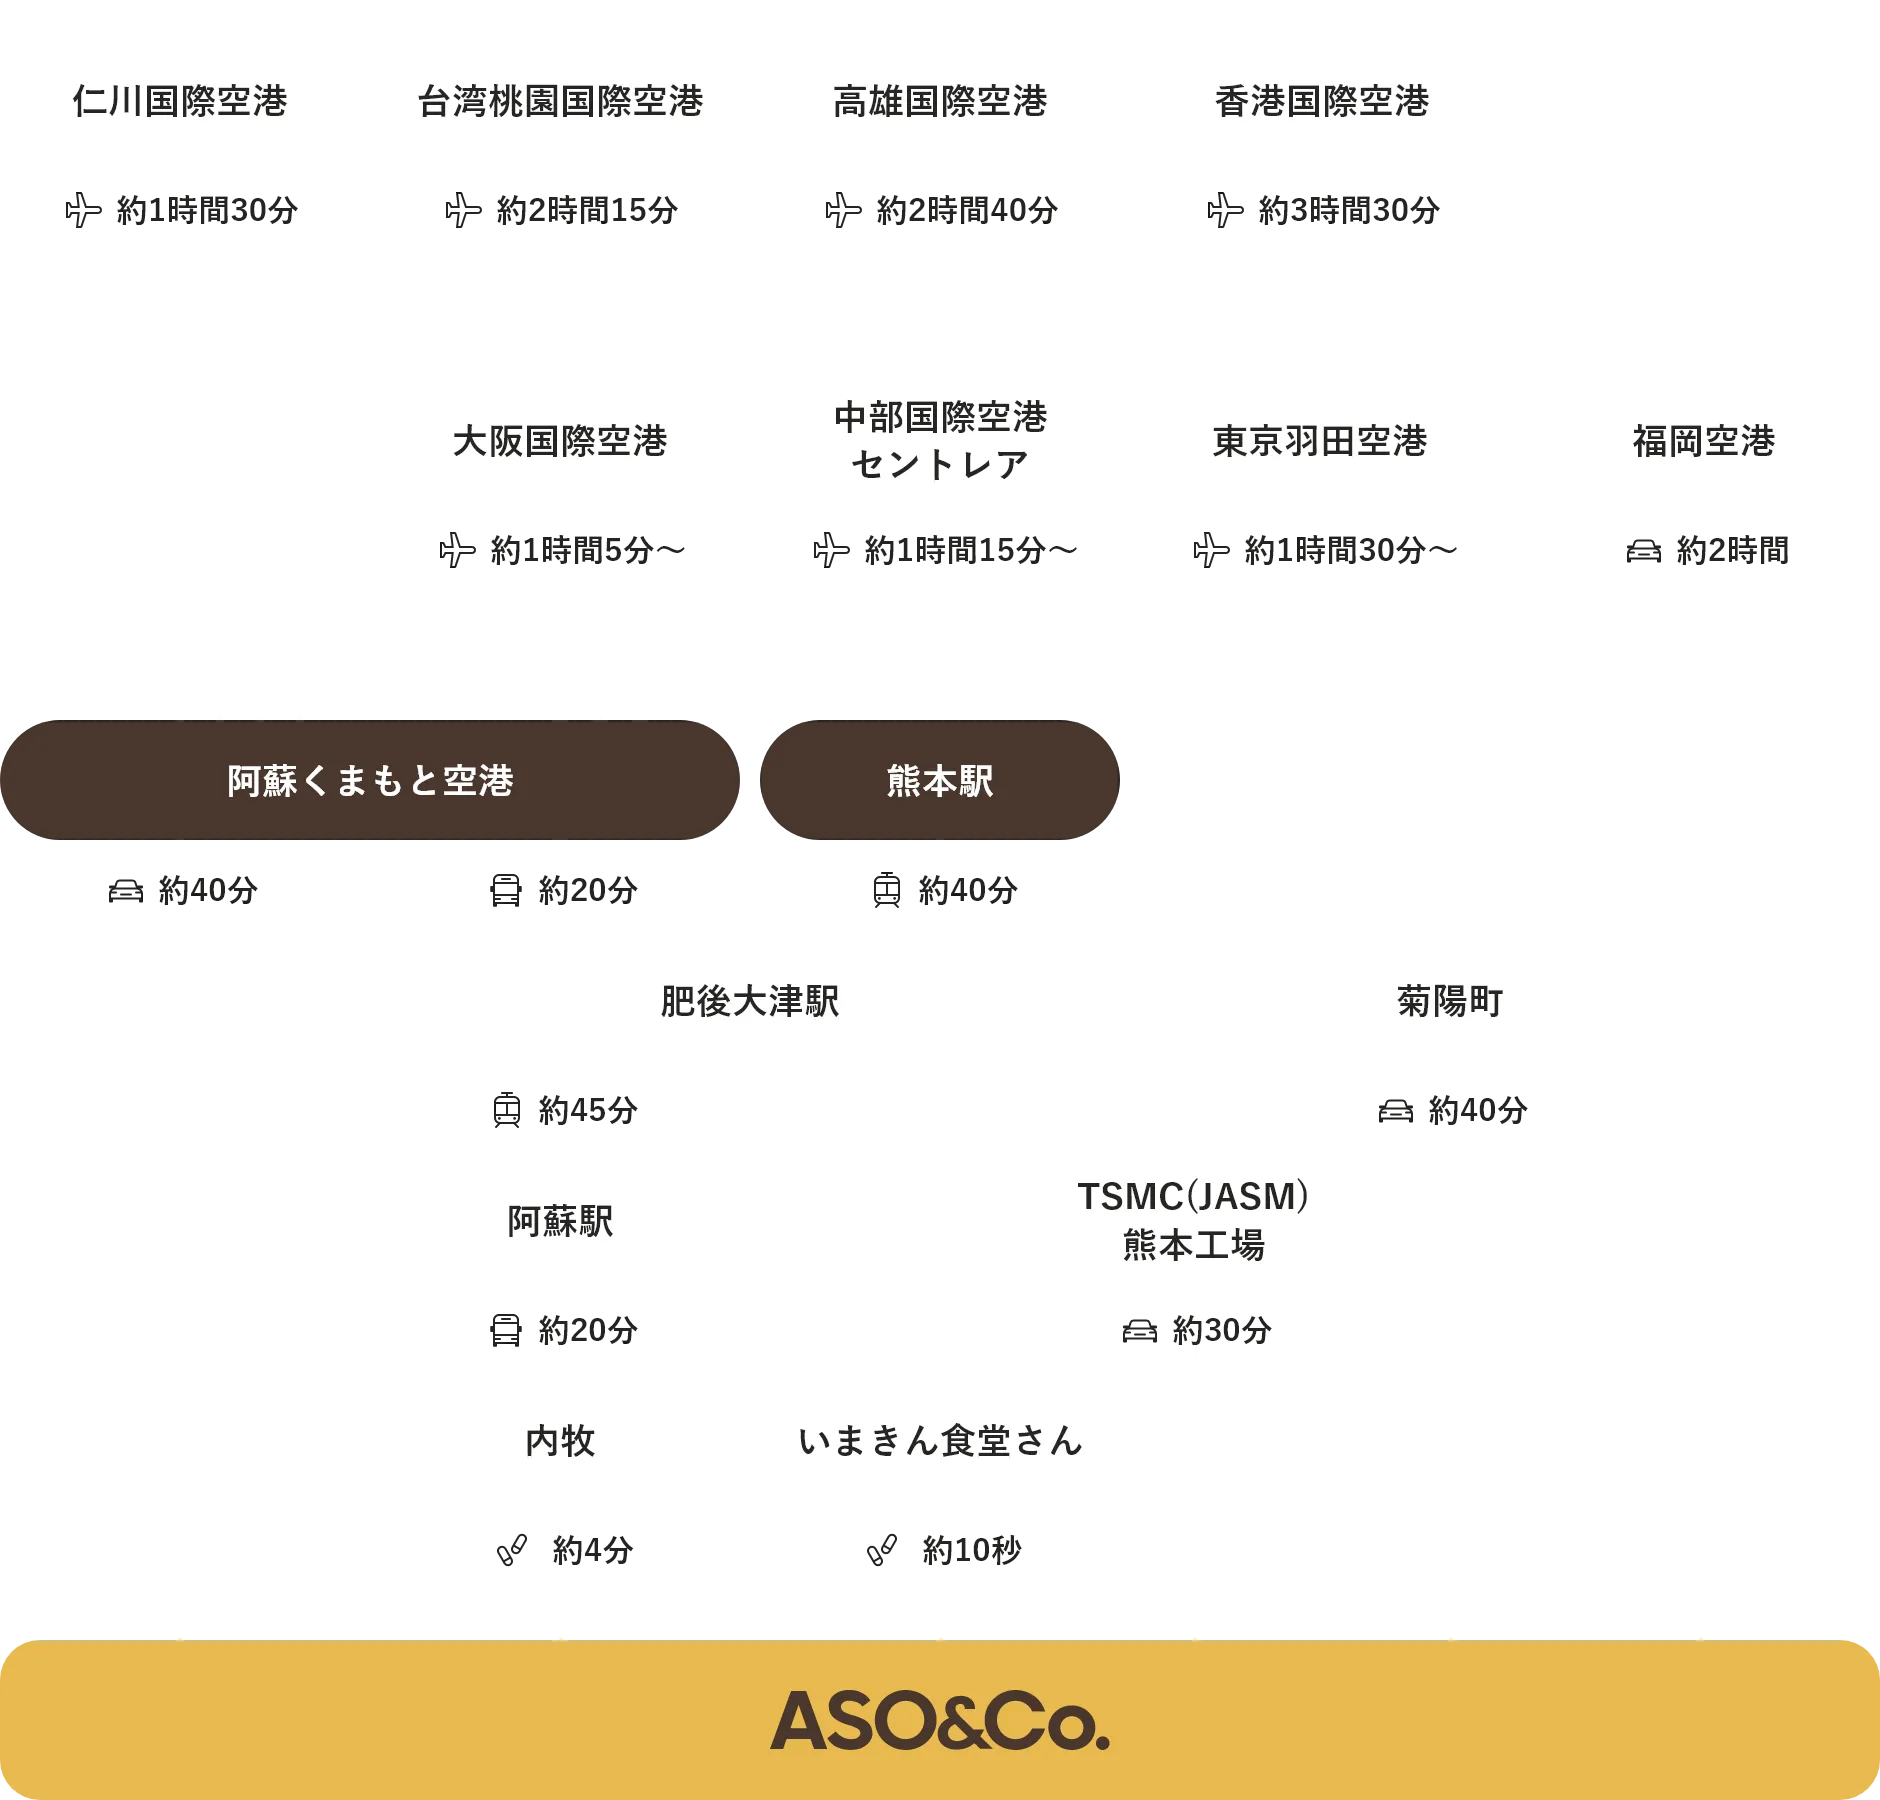 ASO&CO.への案内図